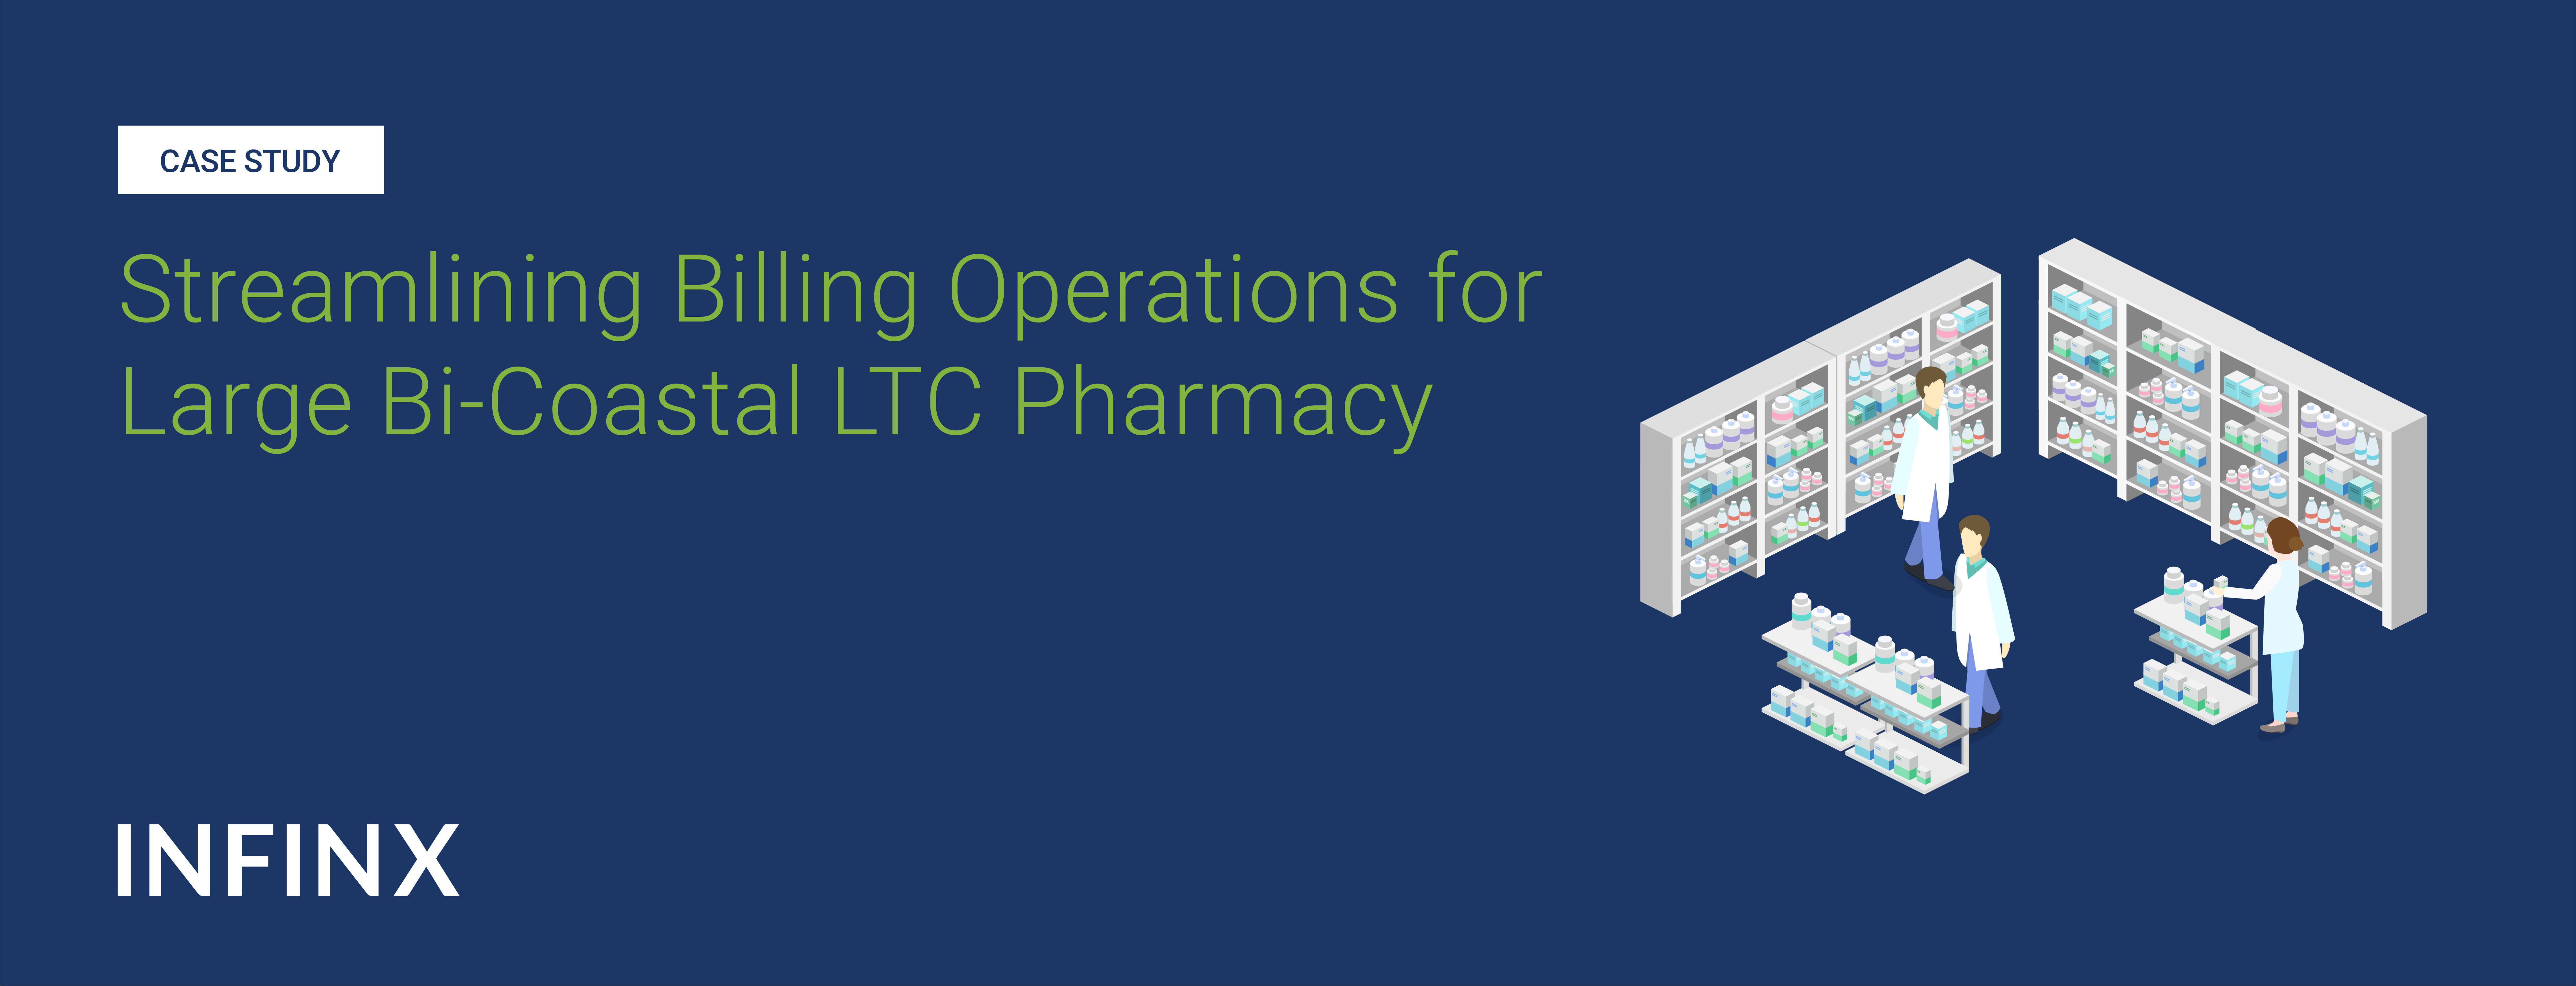 Infinx - Case Study - Streamlining Billing Operations for Large Bi-Coastal LTC Pharmacy